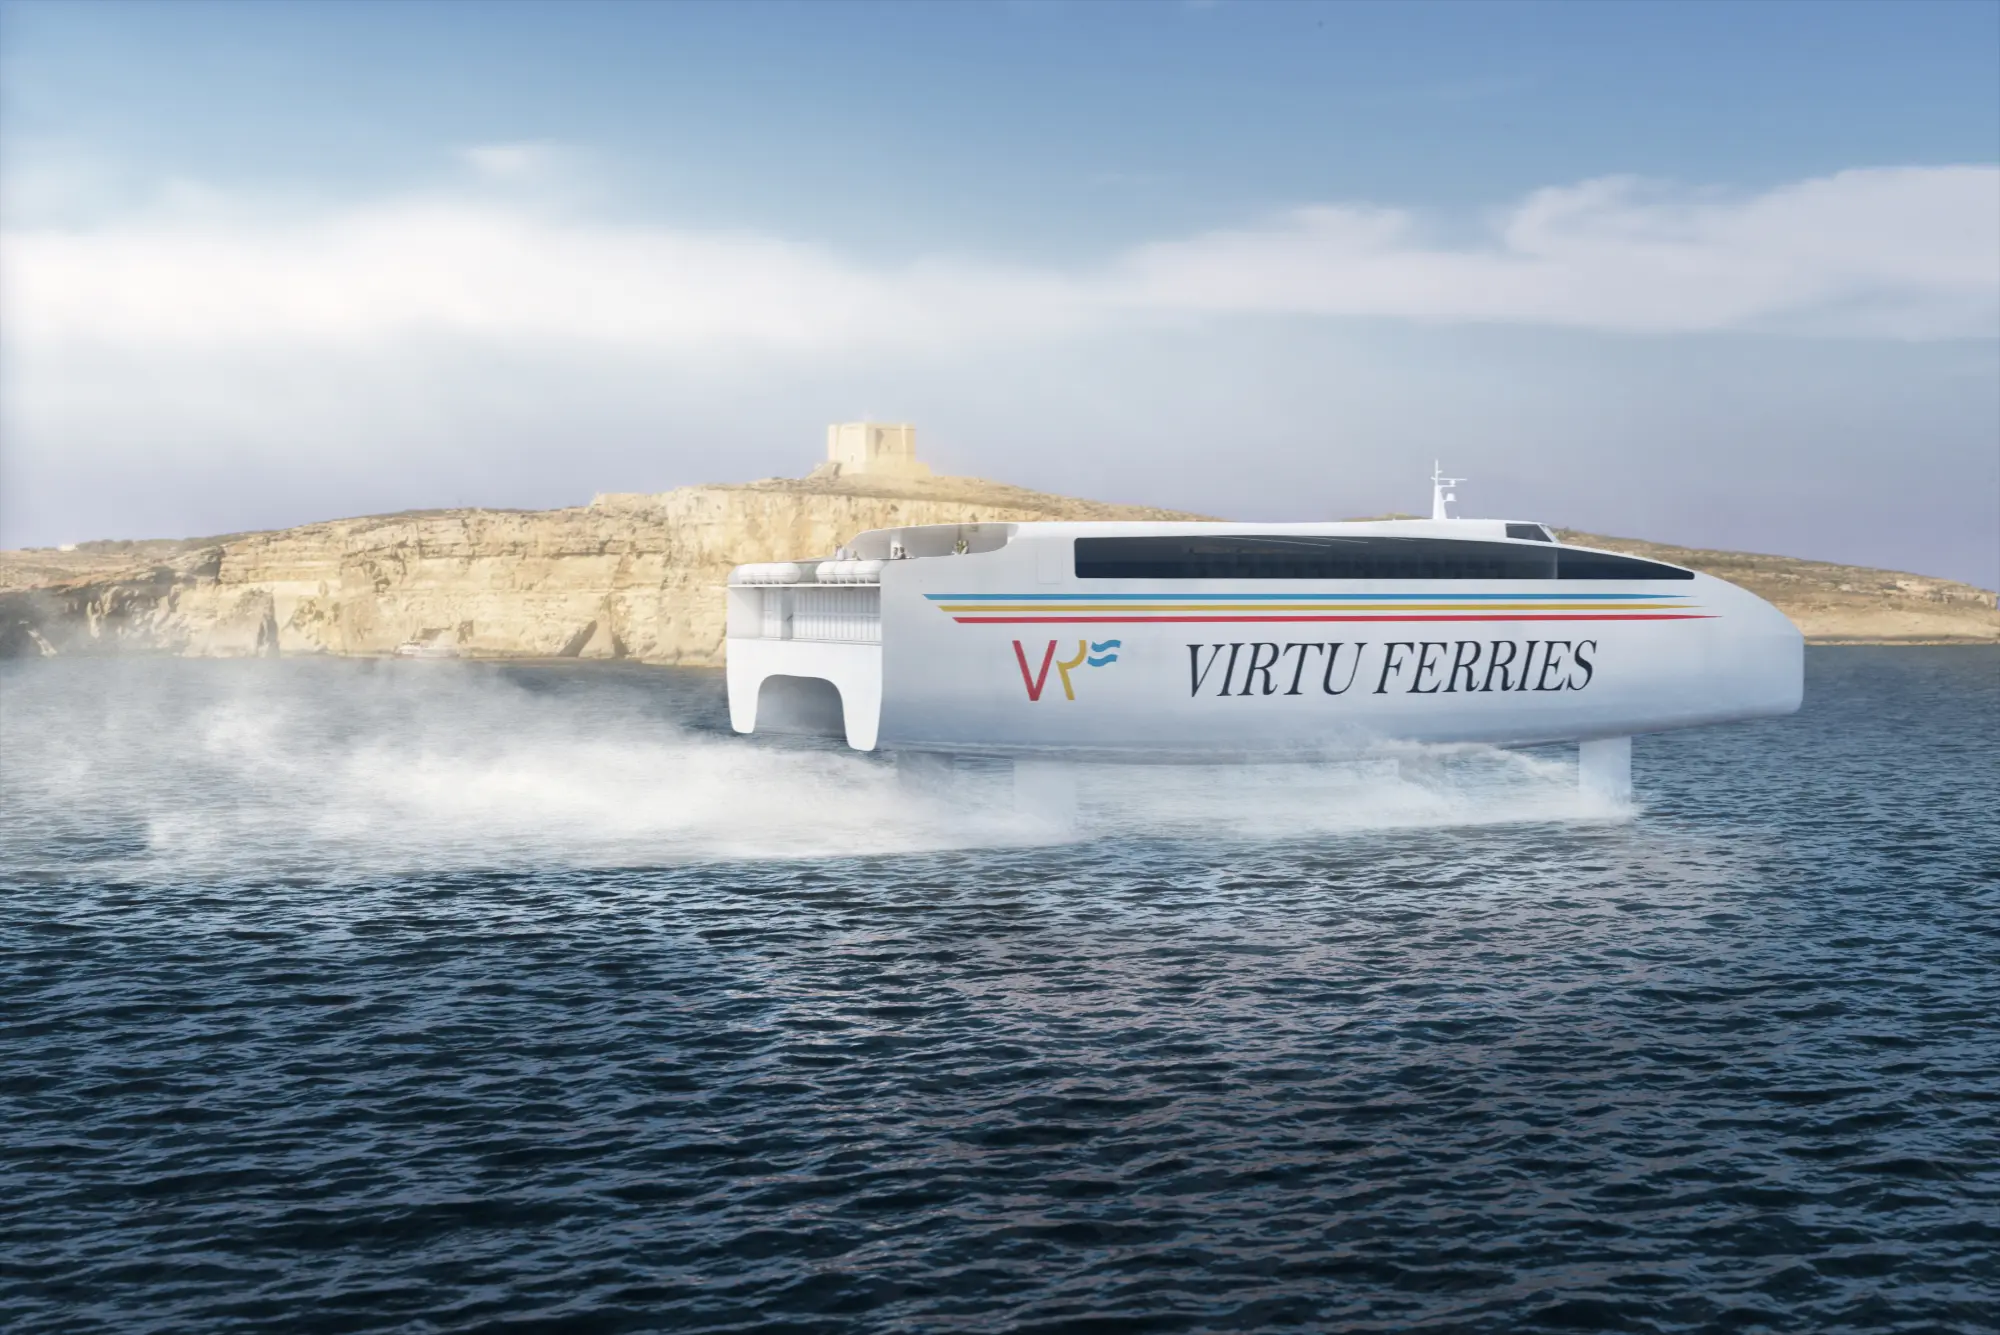 Virtu ferry